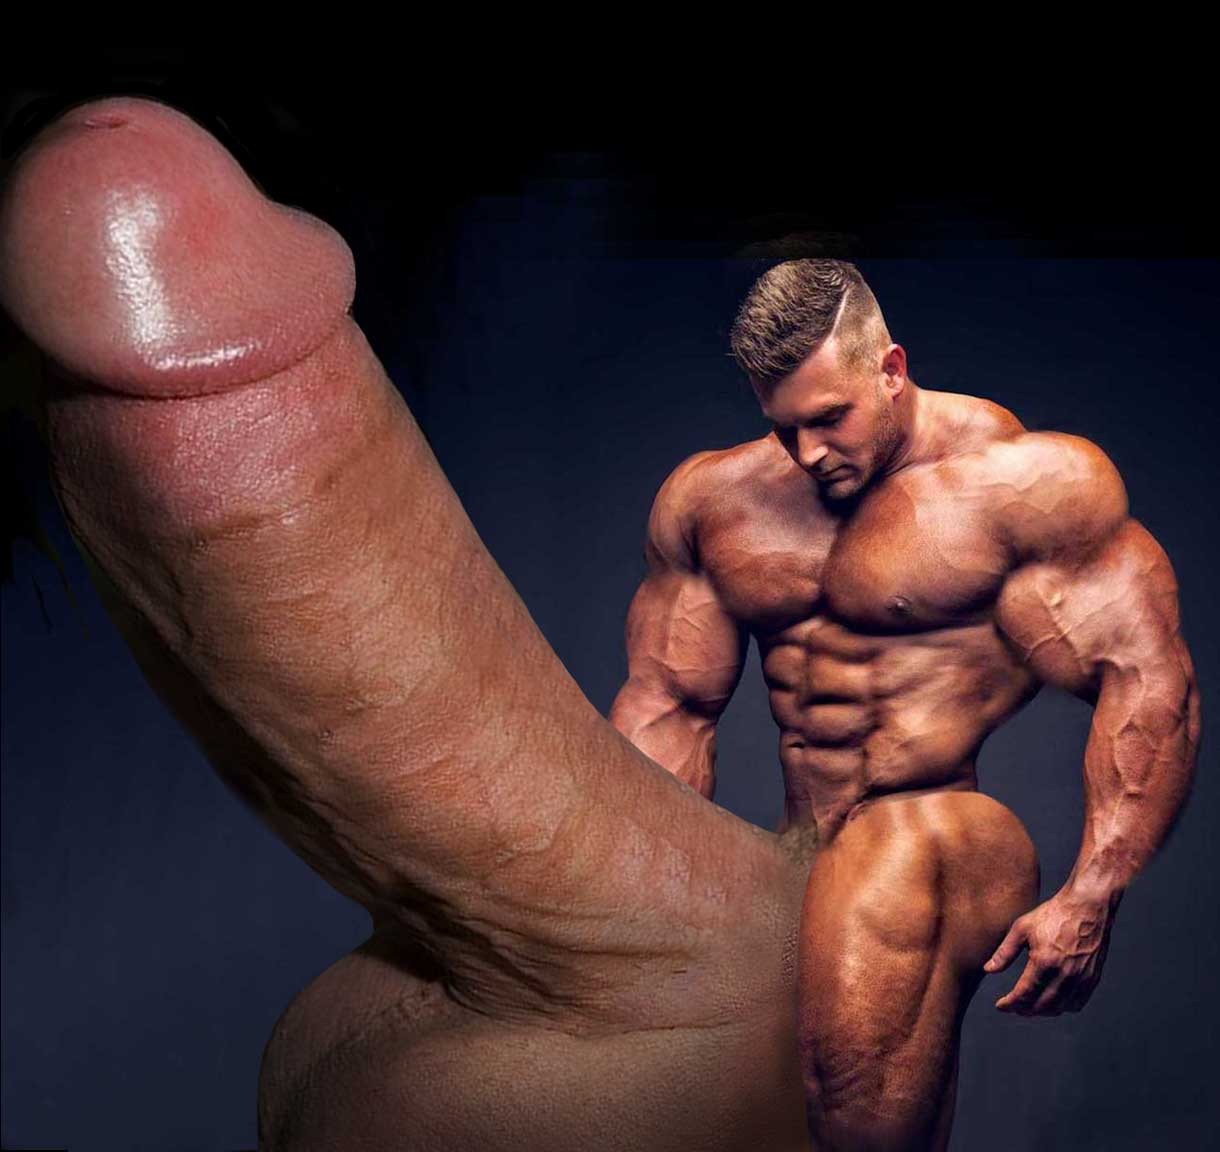 геи с большими мускулами фото 23